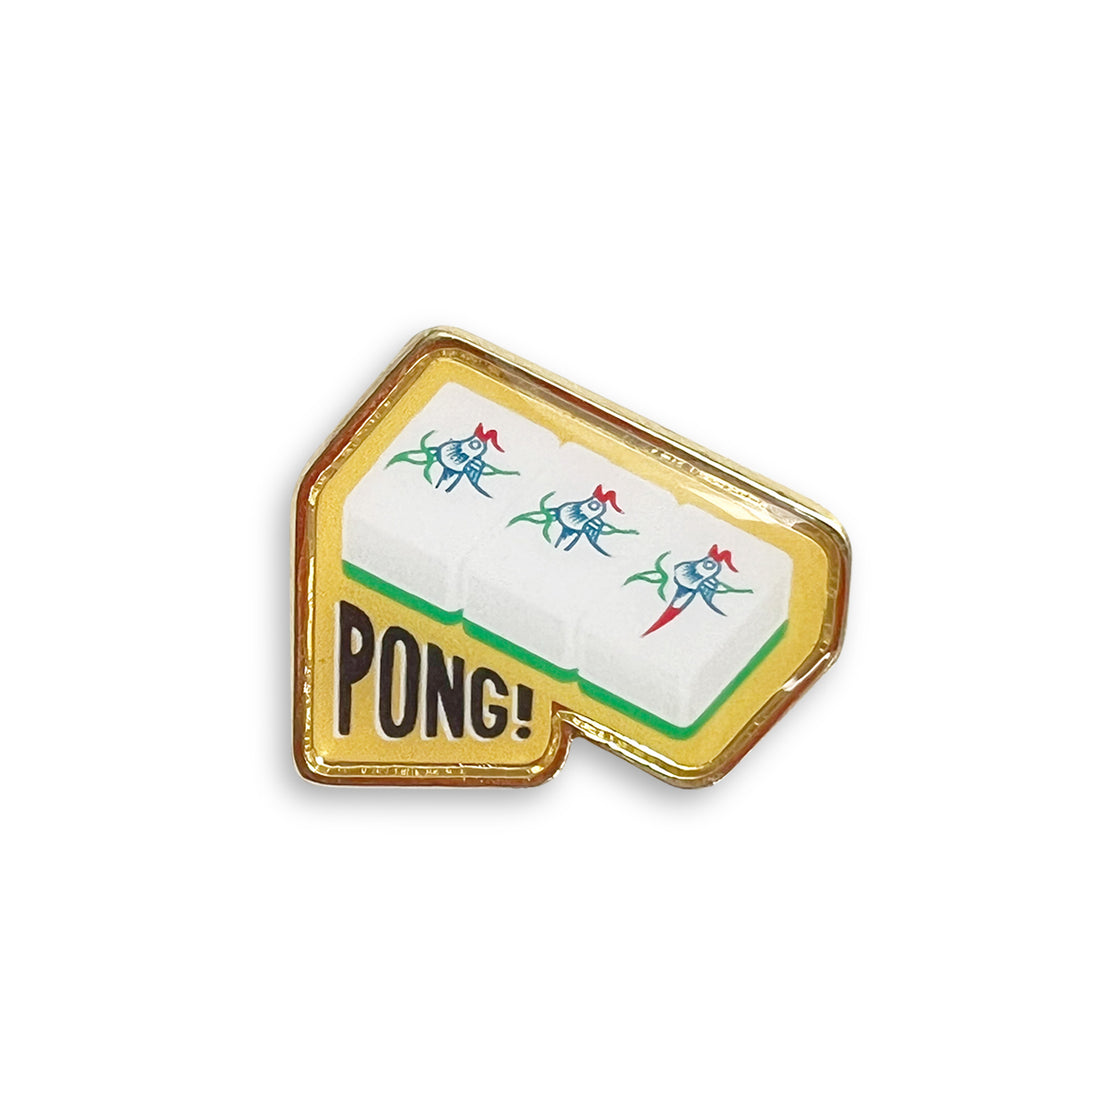 Mahjong pong lapel pin by I&